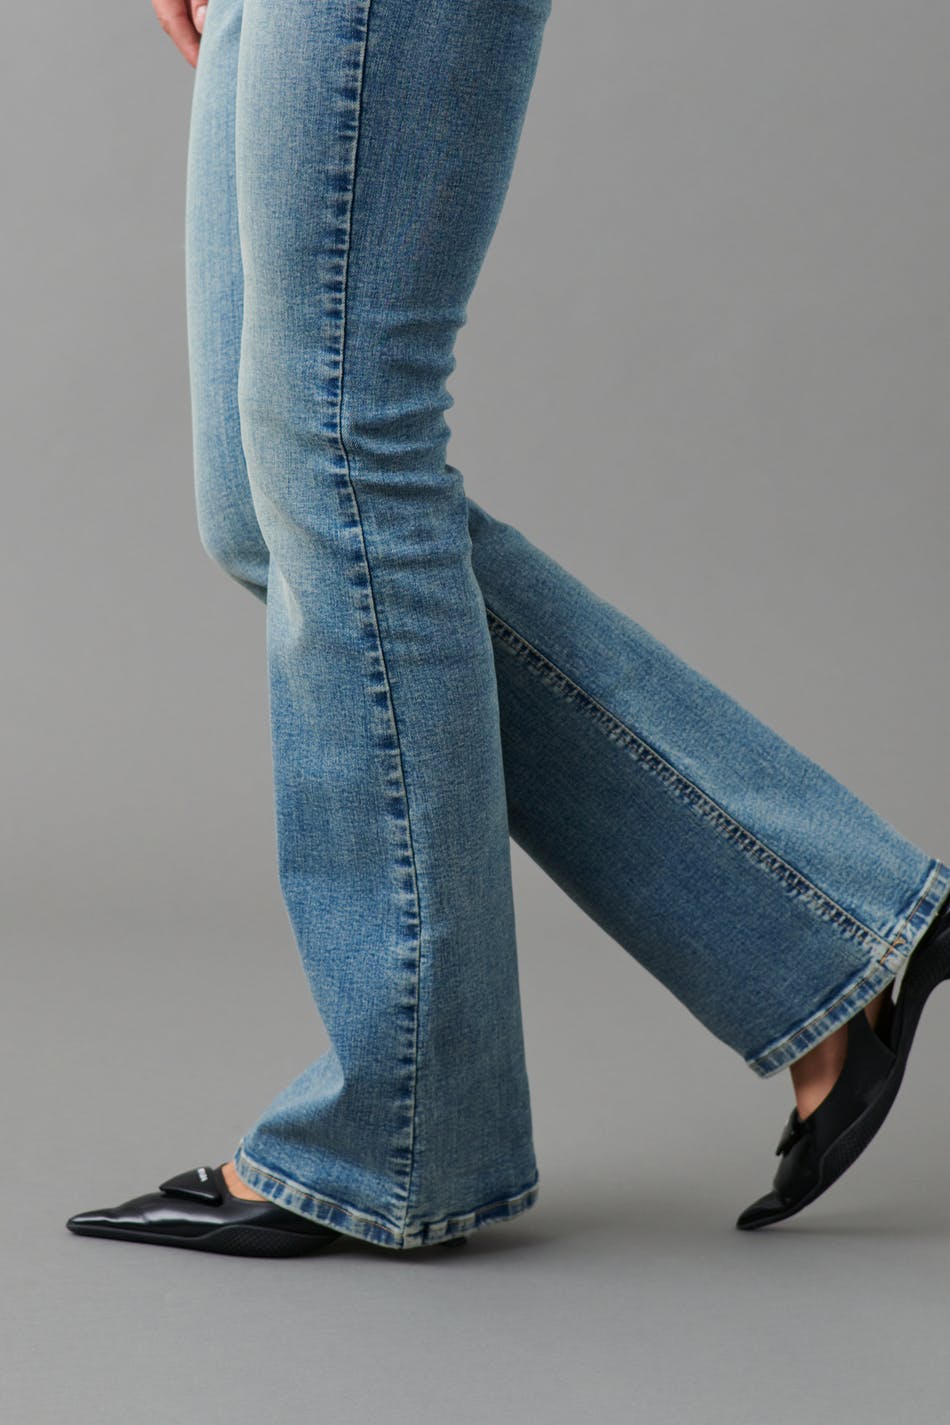 Buy Bootcut Jeans for Women, Bell Bottom Jeans